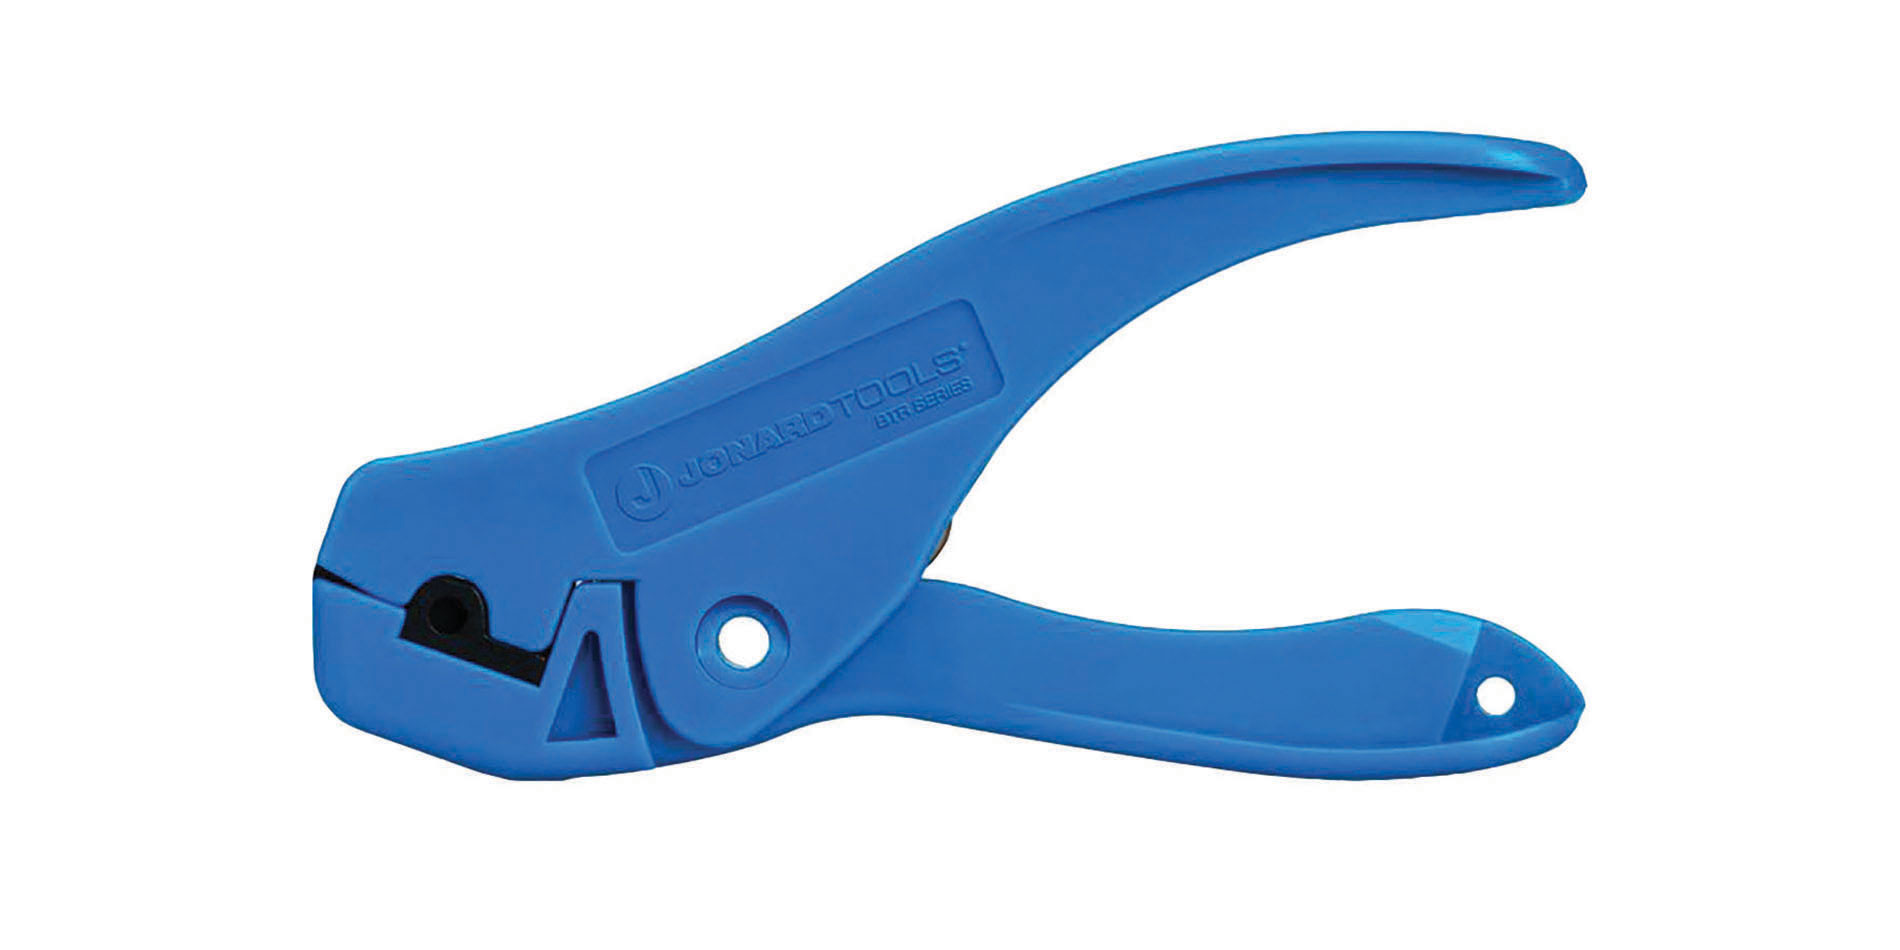 Blue ring tool. Image by Jonard Tools.